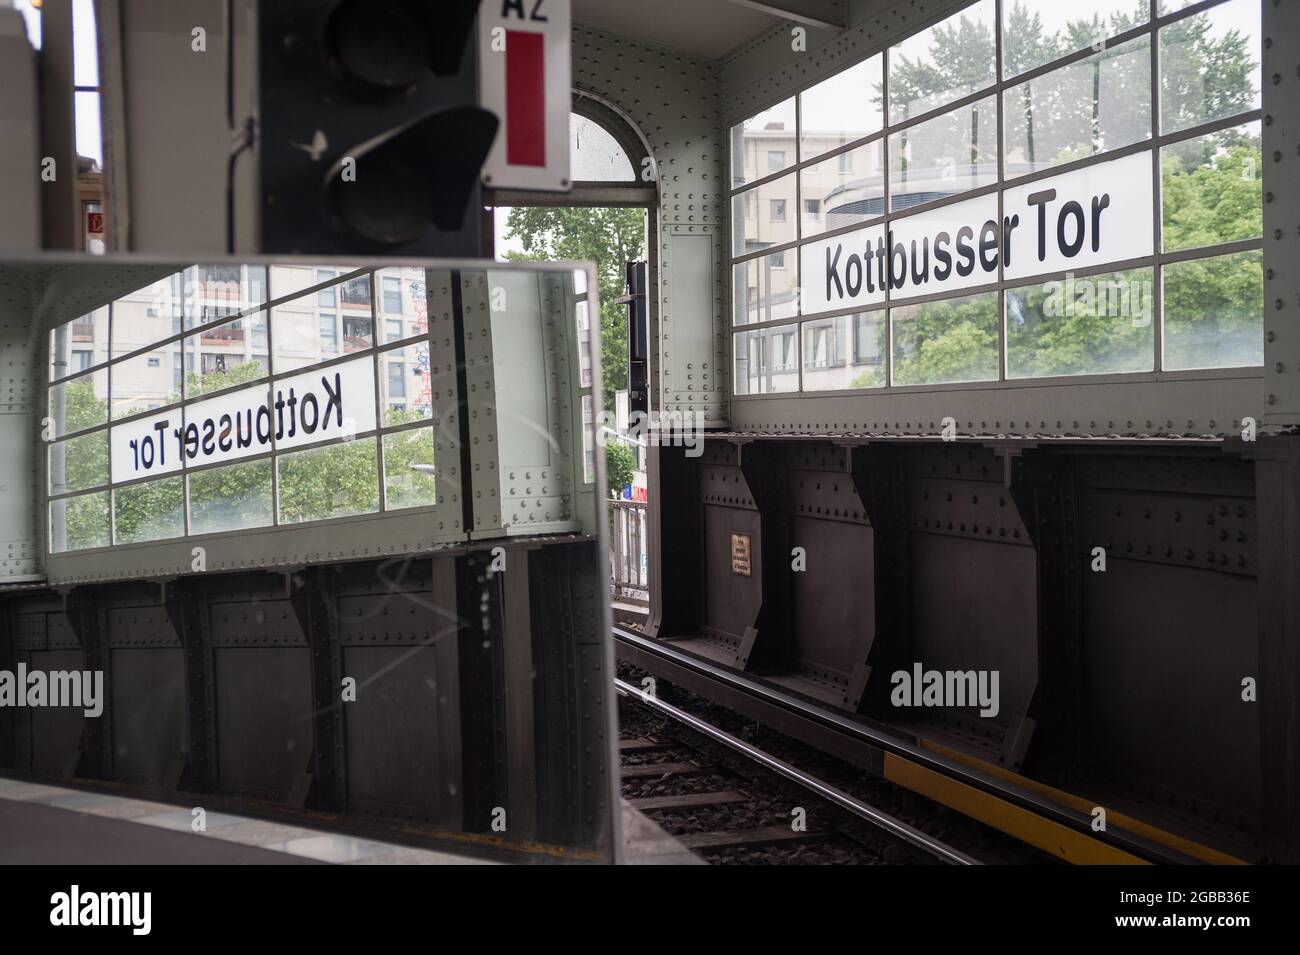 26.05.2016, Berlin, Germany, Europe - Platform at the elevated U-Bahnhof Kottbusser Tor station in the district of Friedrichshain-Kreuzberg. Stock Photo